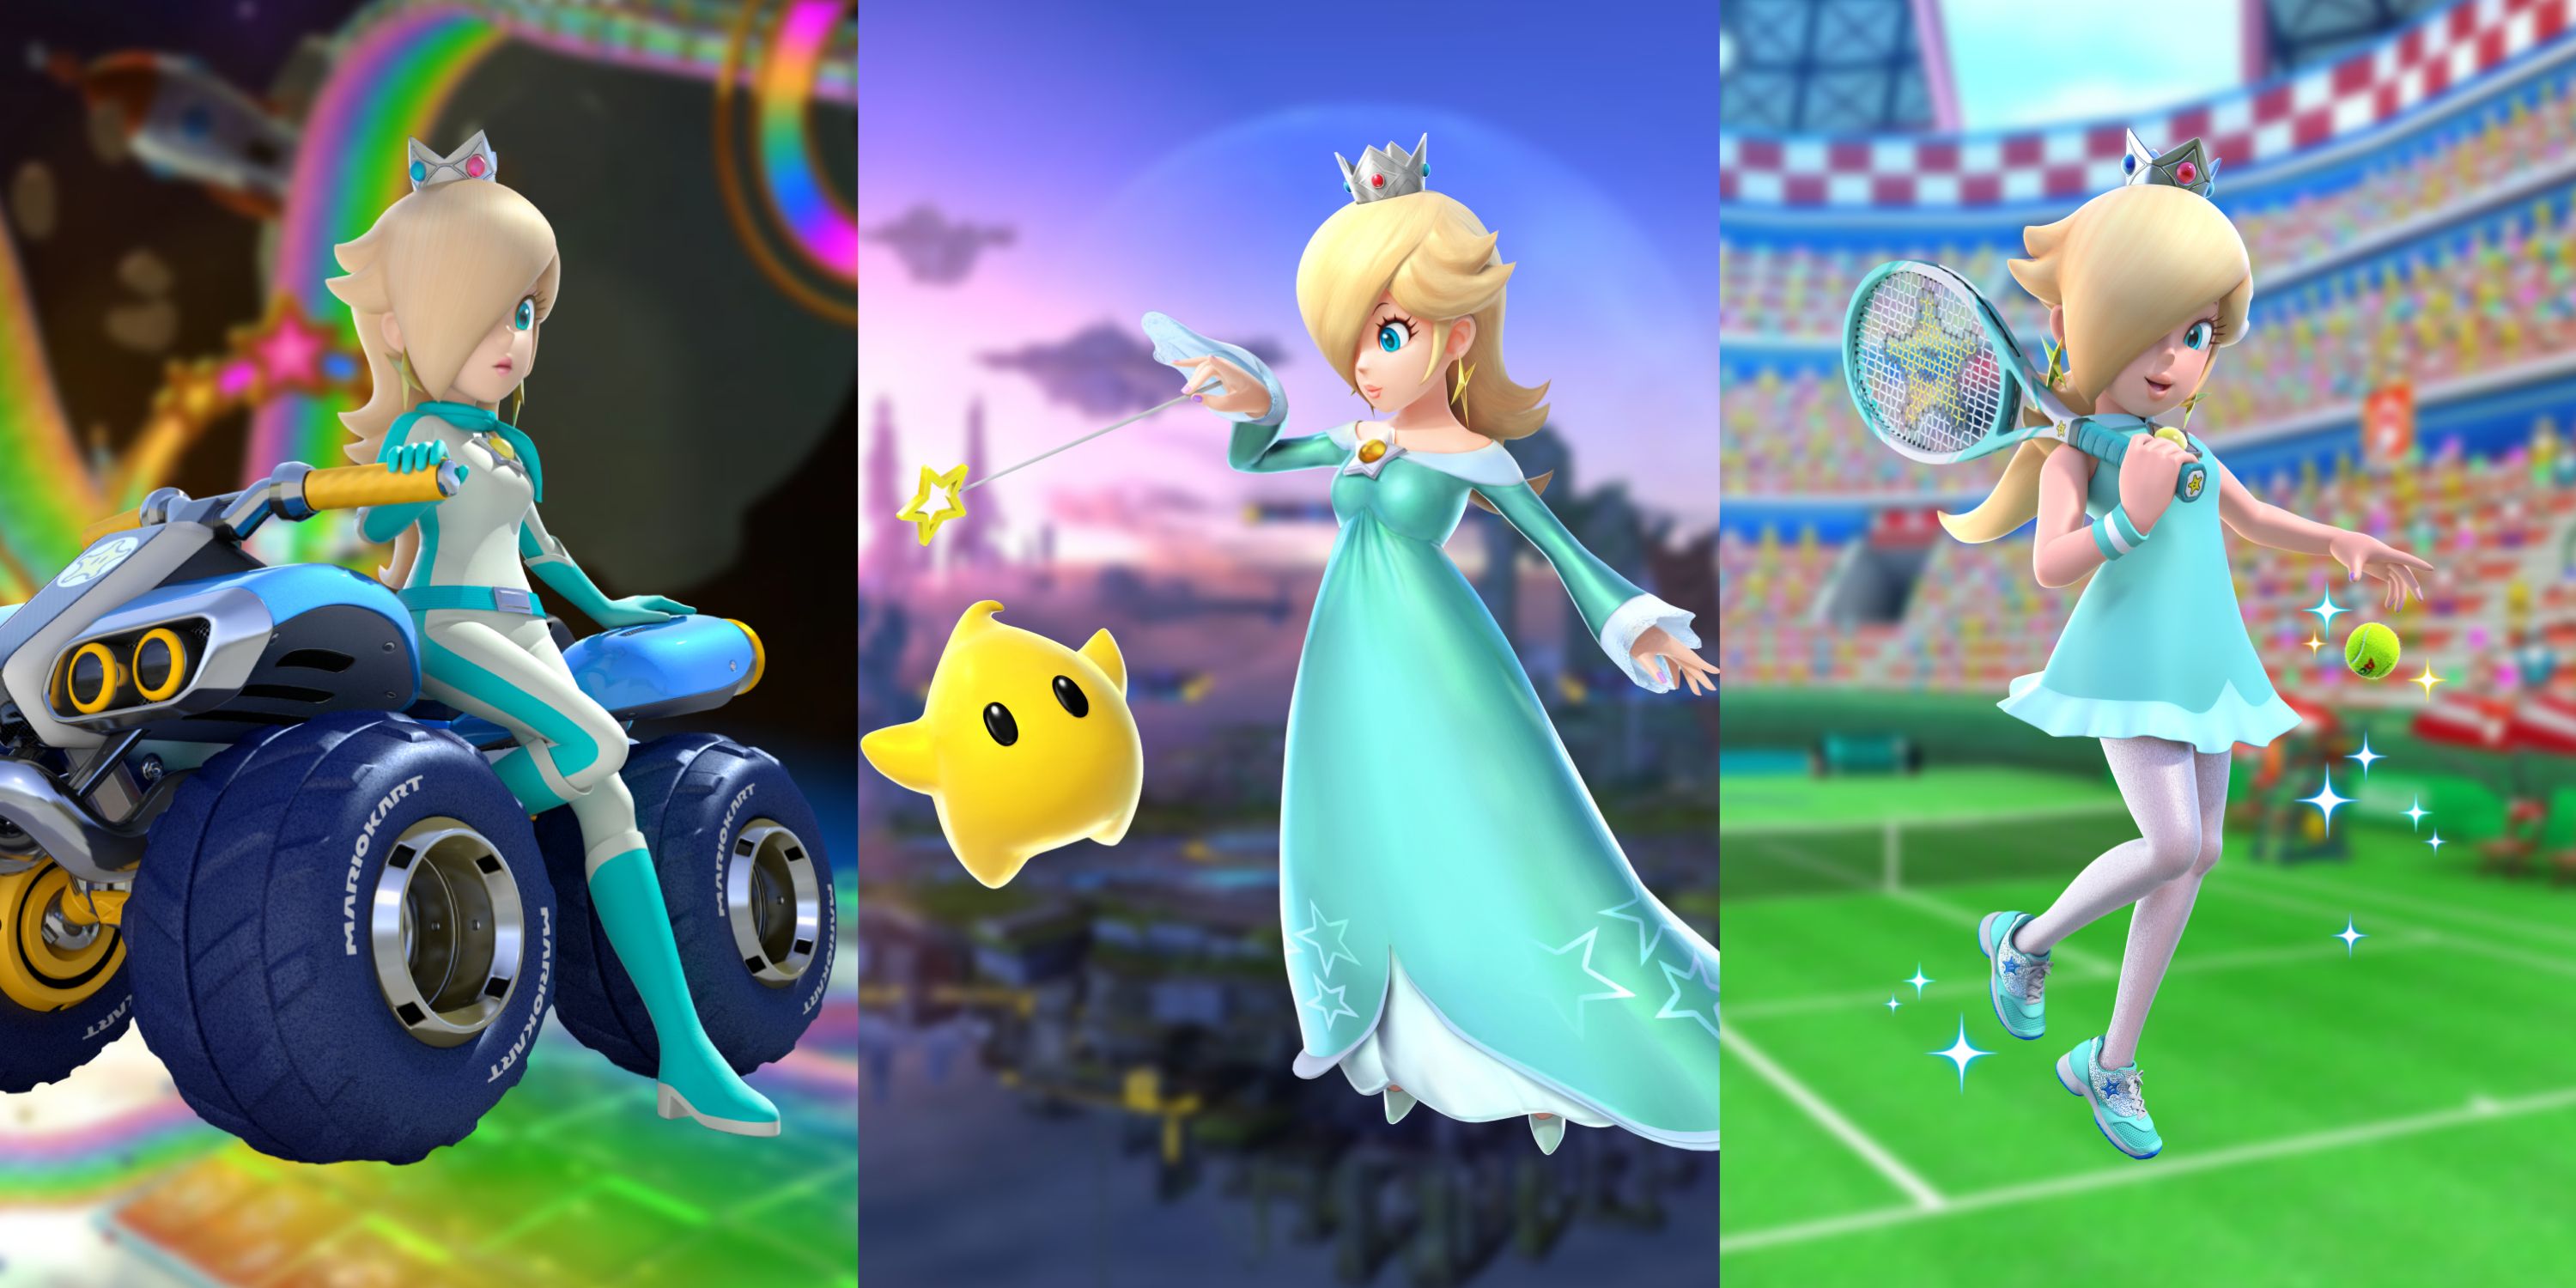 Rosalina in her biker suit from Mario Kart 8, Rosalina in her dress in Super Smash Bros, and Rosalina in her tennis outfit in Mario Tennis Aces